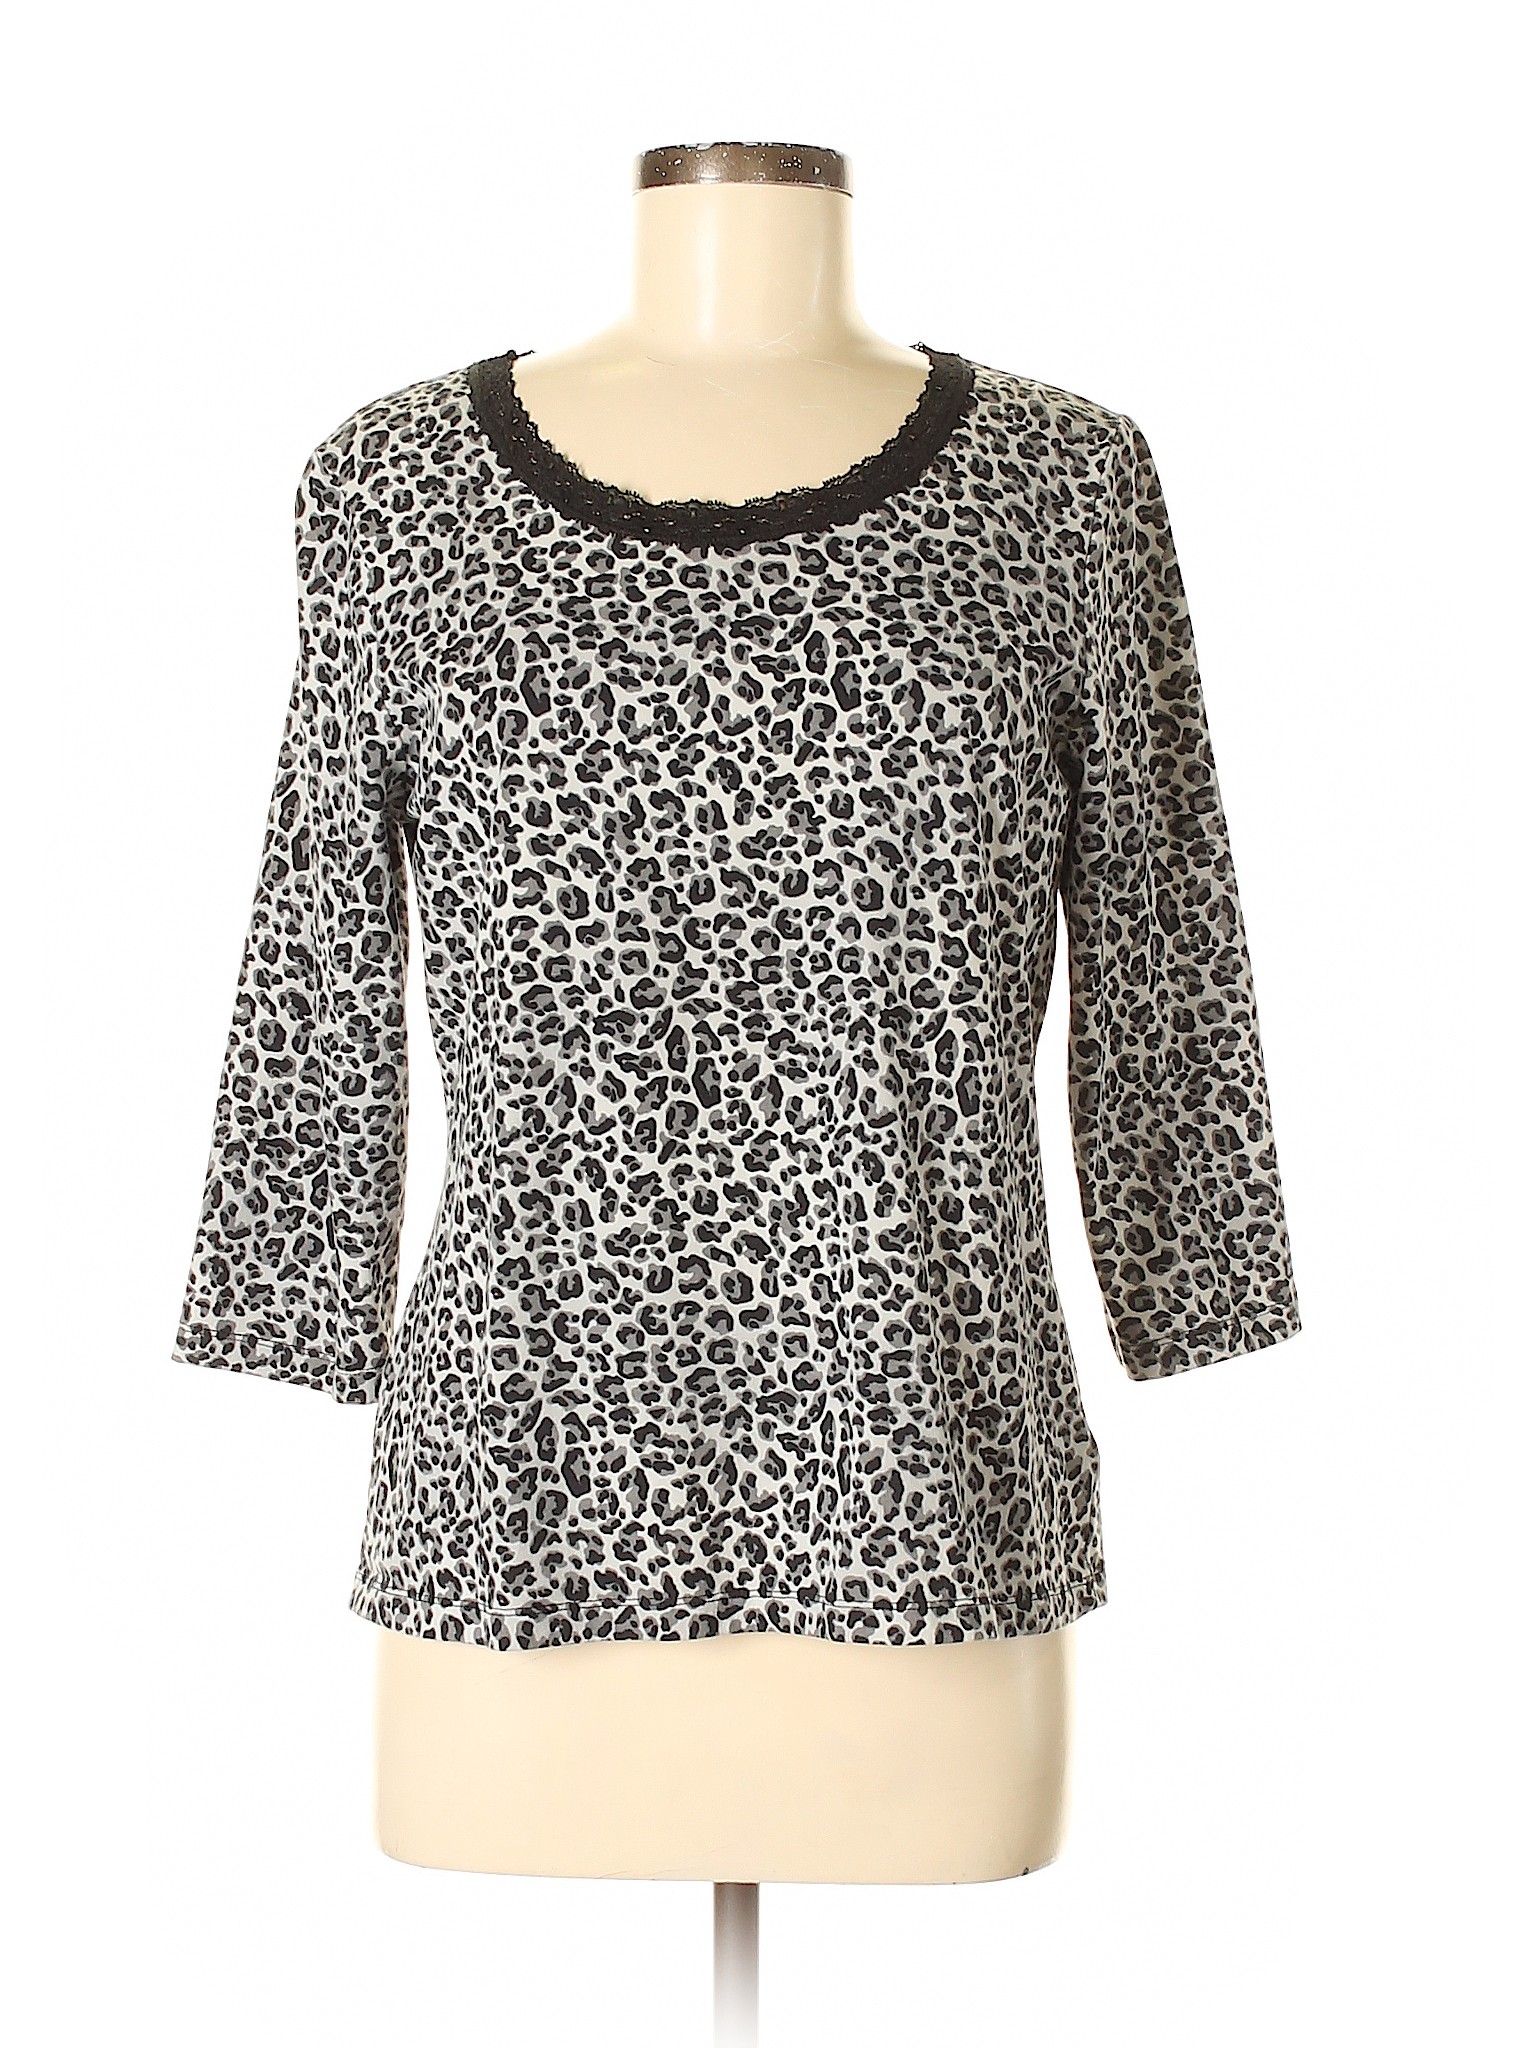 Laura Ashley 100% Cotton Animal Print Black 3/4 Sleeve Top Size M - 86% ...